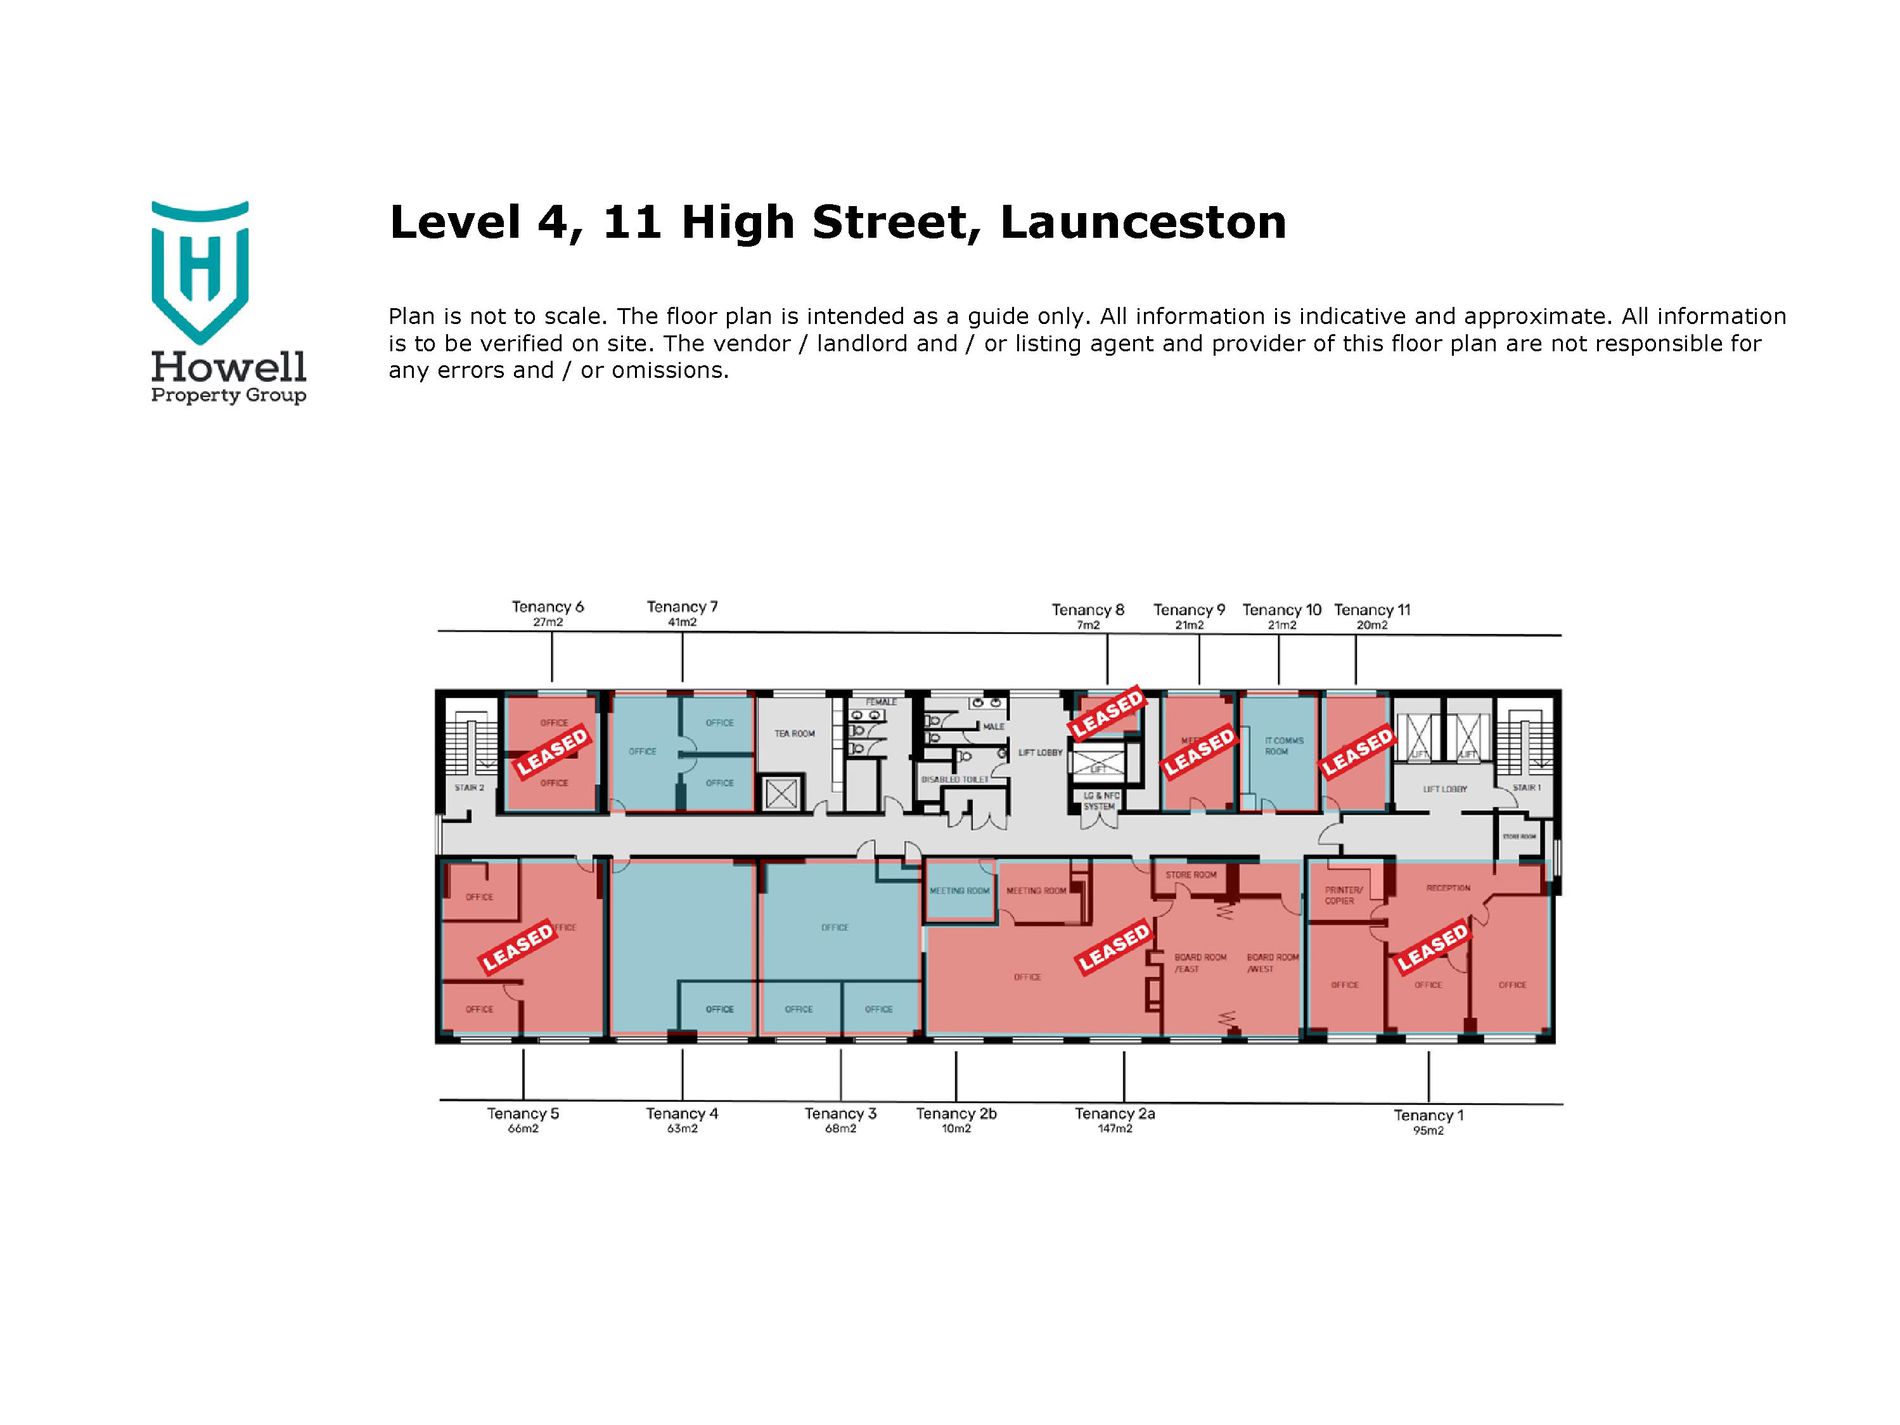 Level 4 / 11 High Street, Launceston